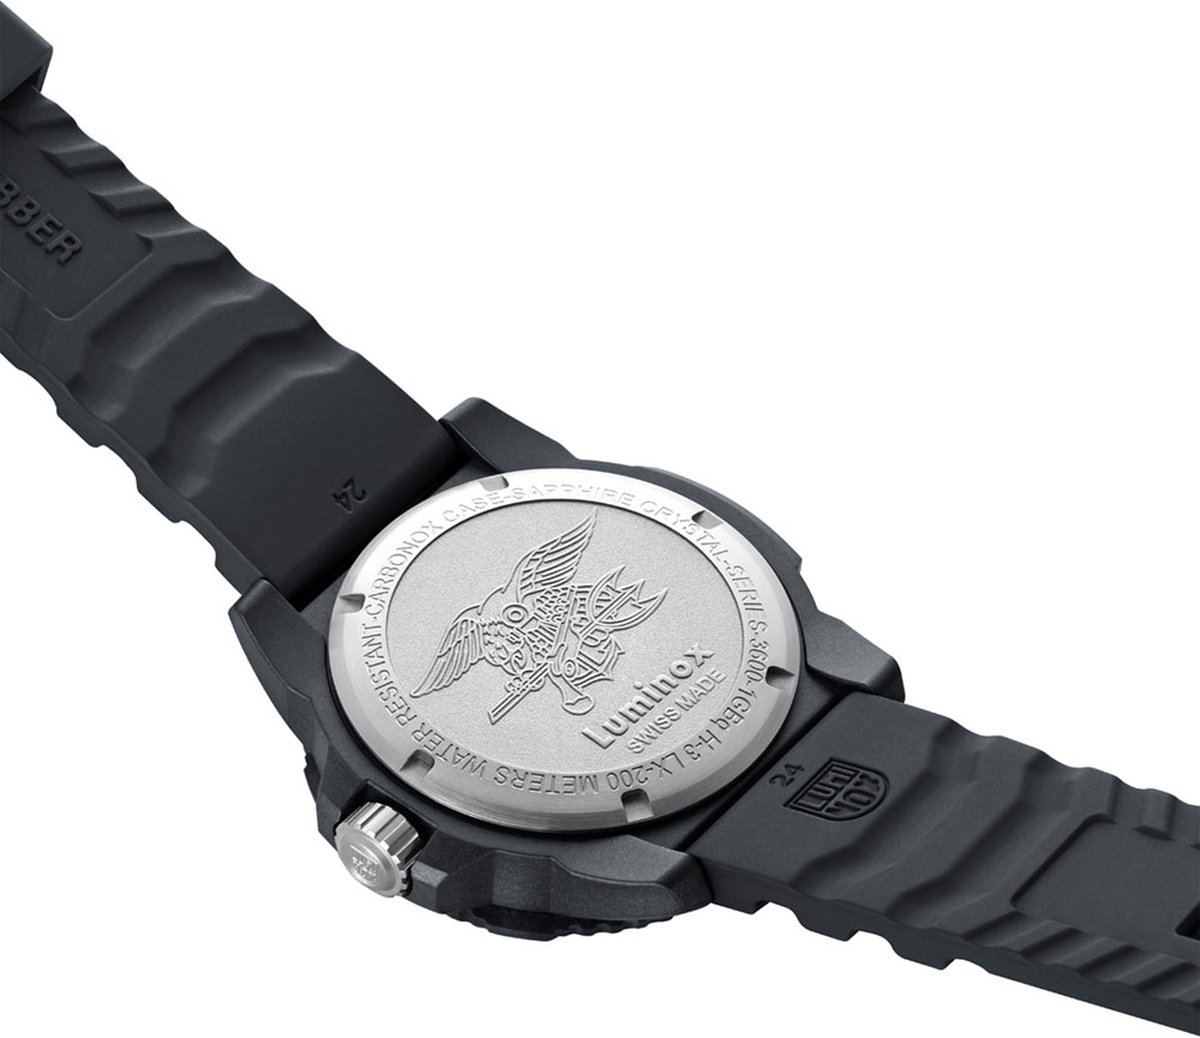 Navy seal series XS.3615 Mannen Quartz horloge